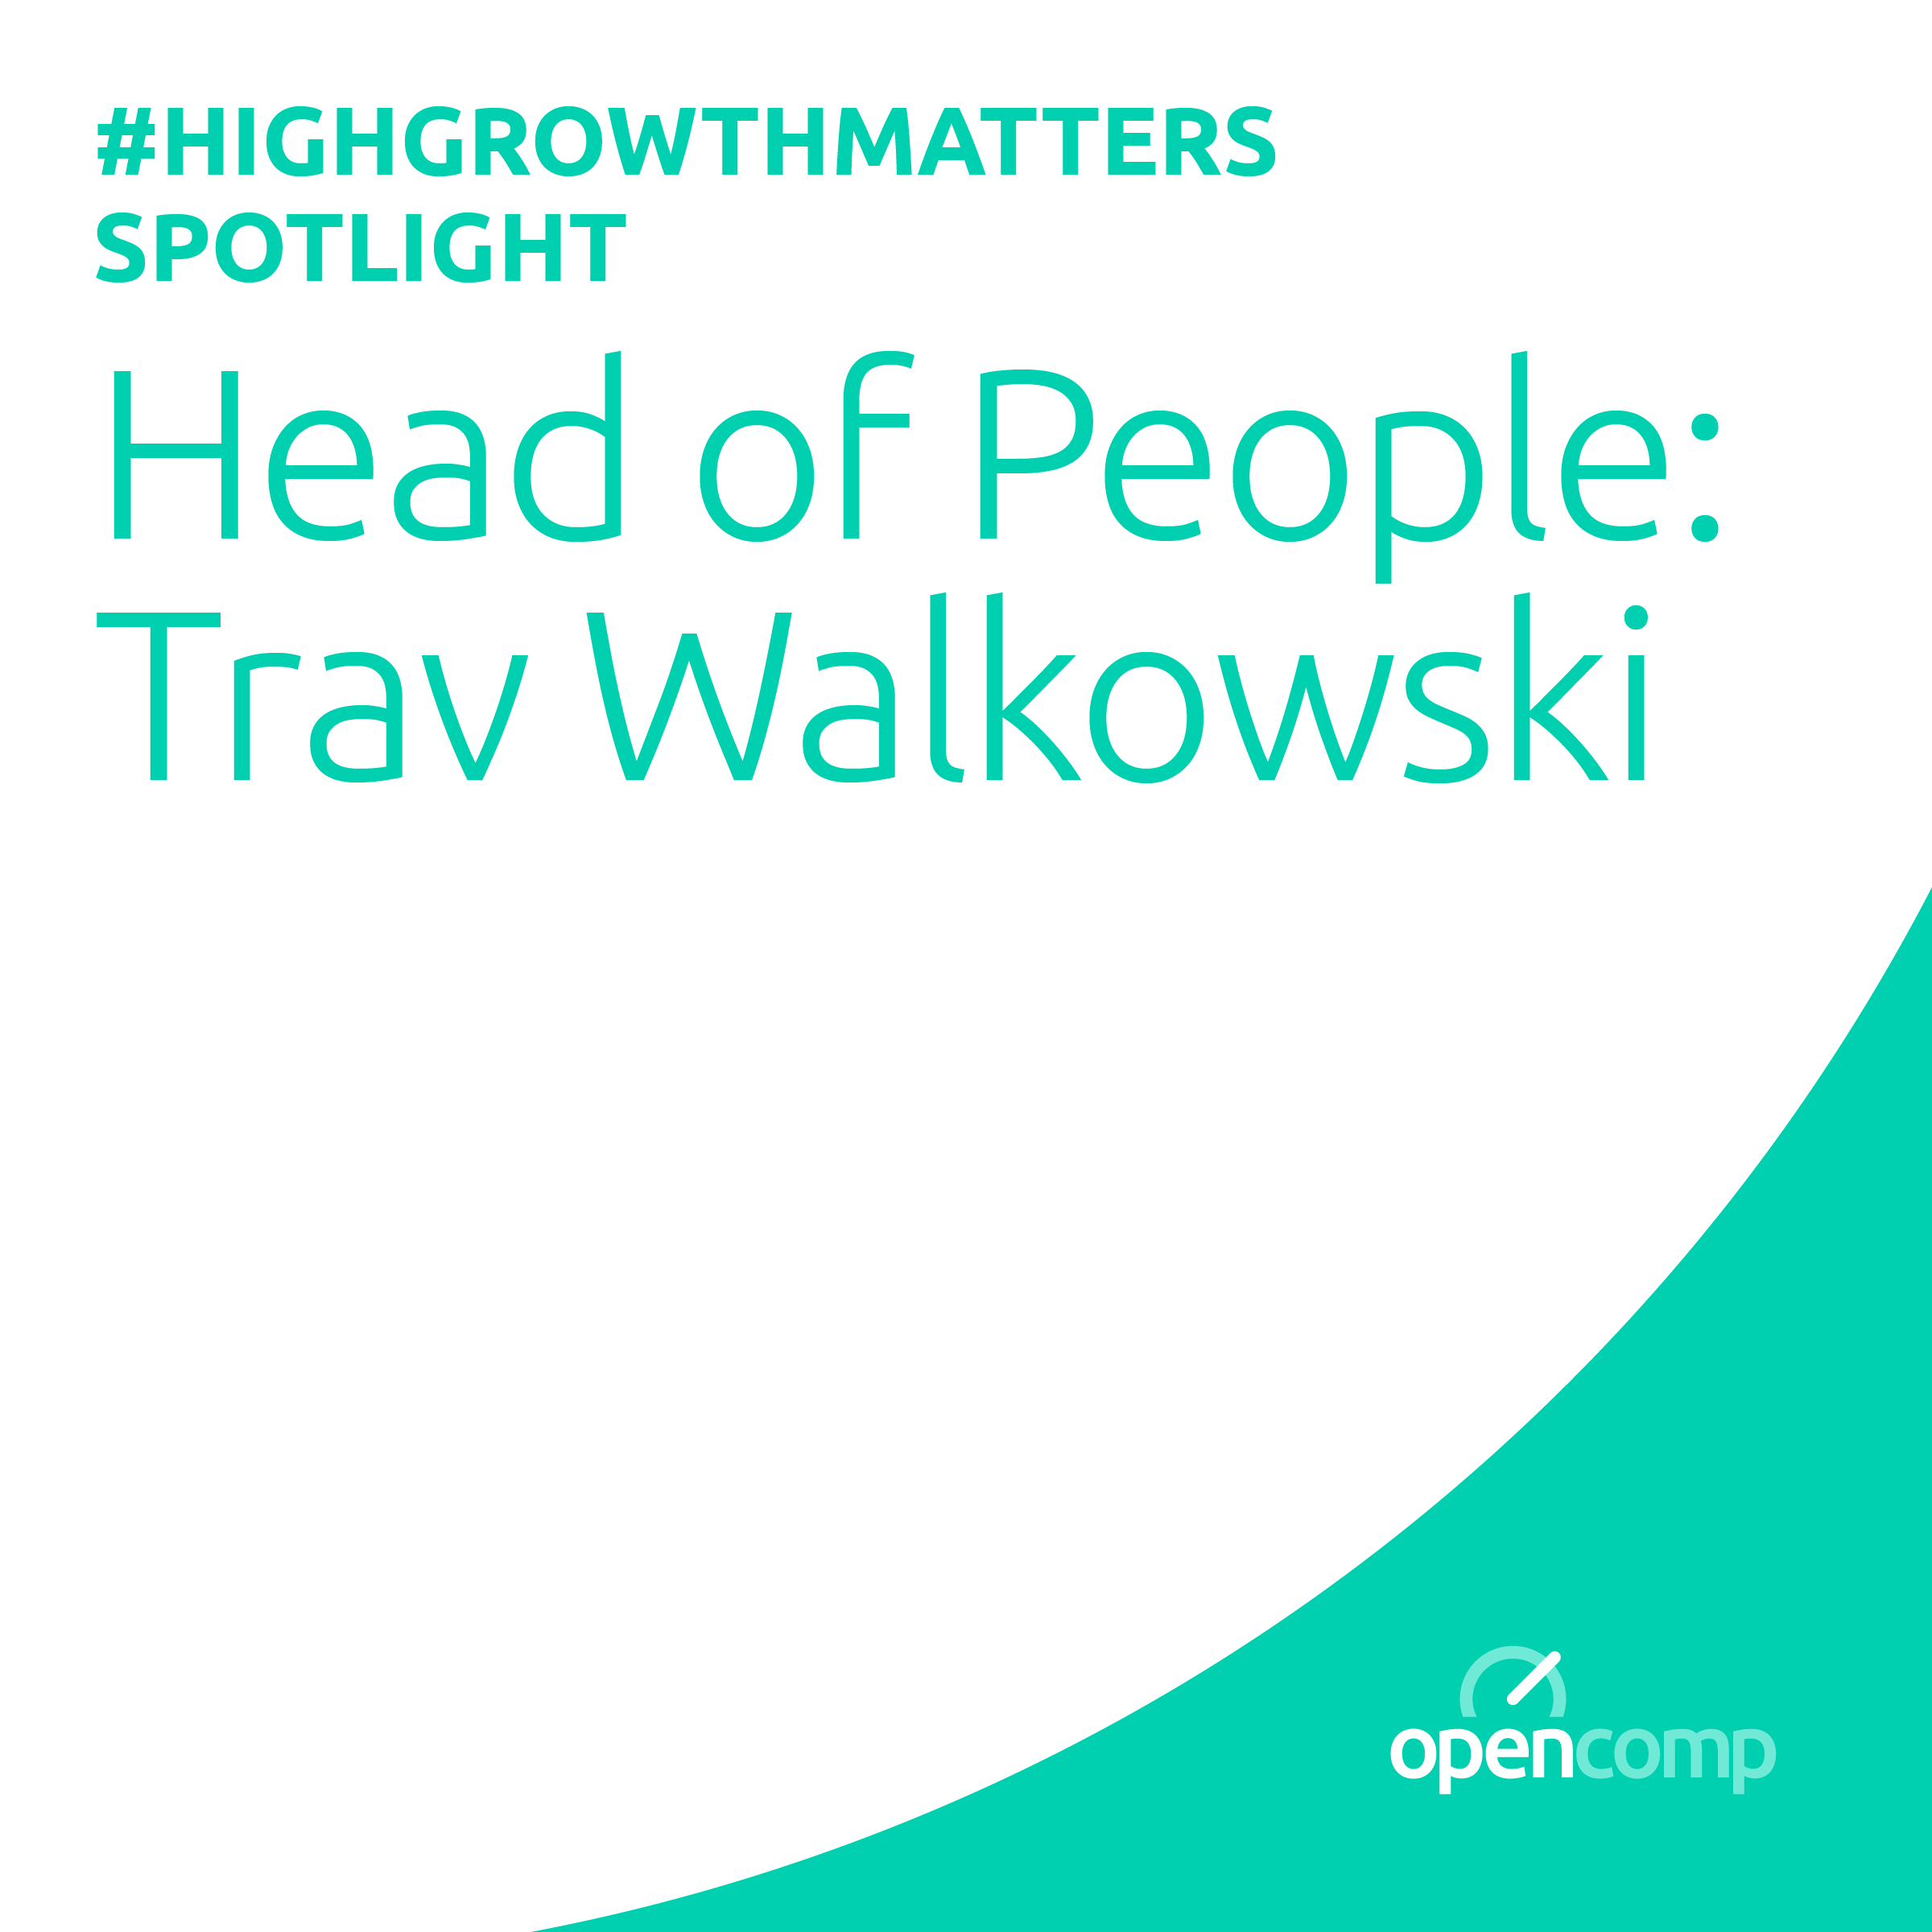 #HighGrowthMatters spotlight: Head of People Trav Walkowski on Honoring Evolving Employee Preferences